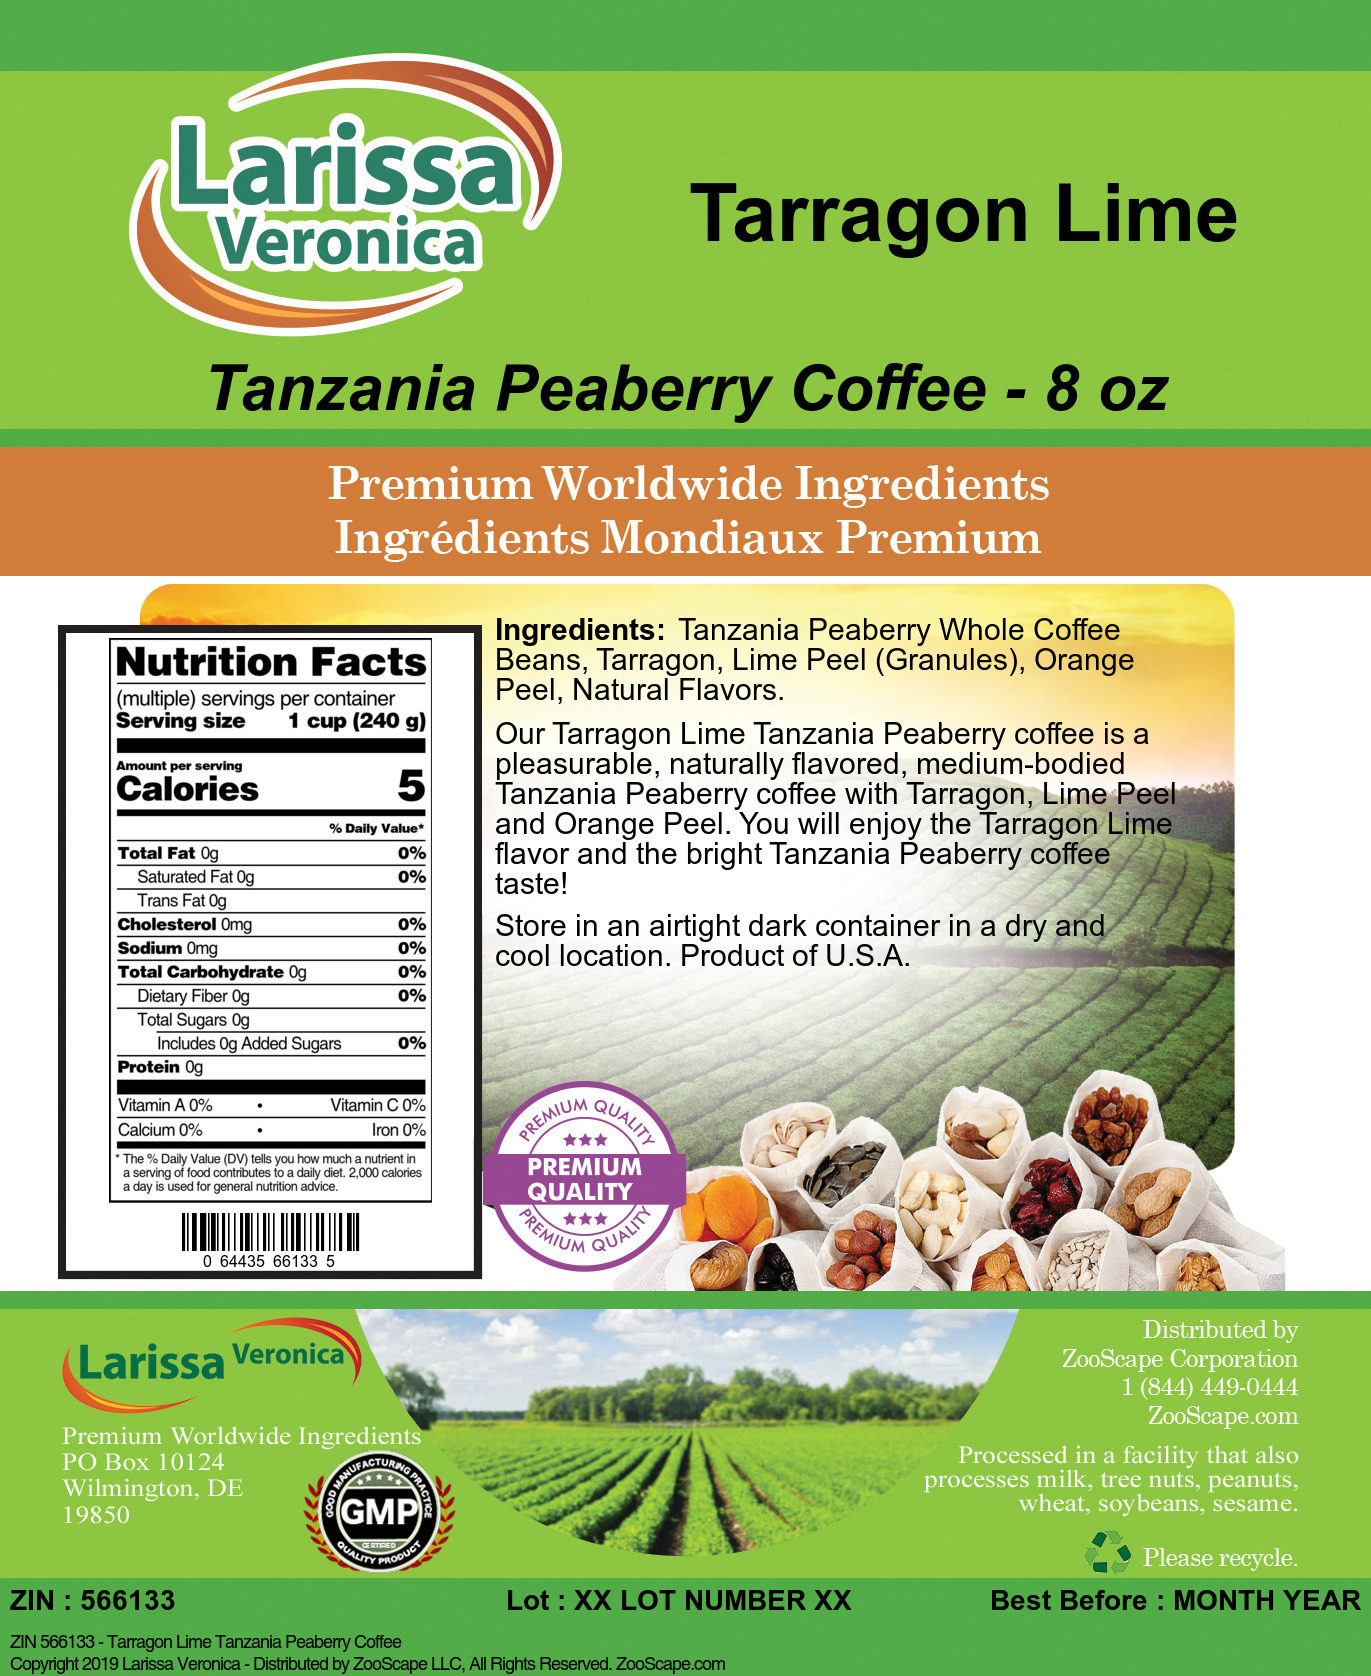 Tarragon Lime Tanzania Peaberry Coffee - Label